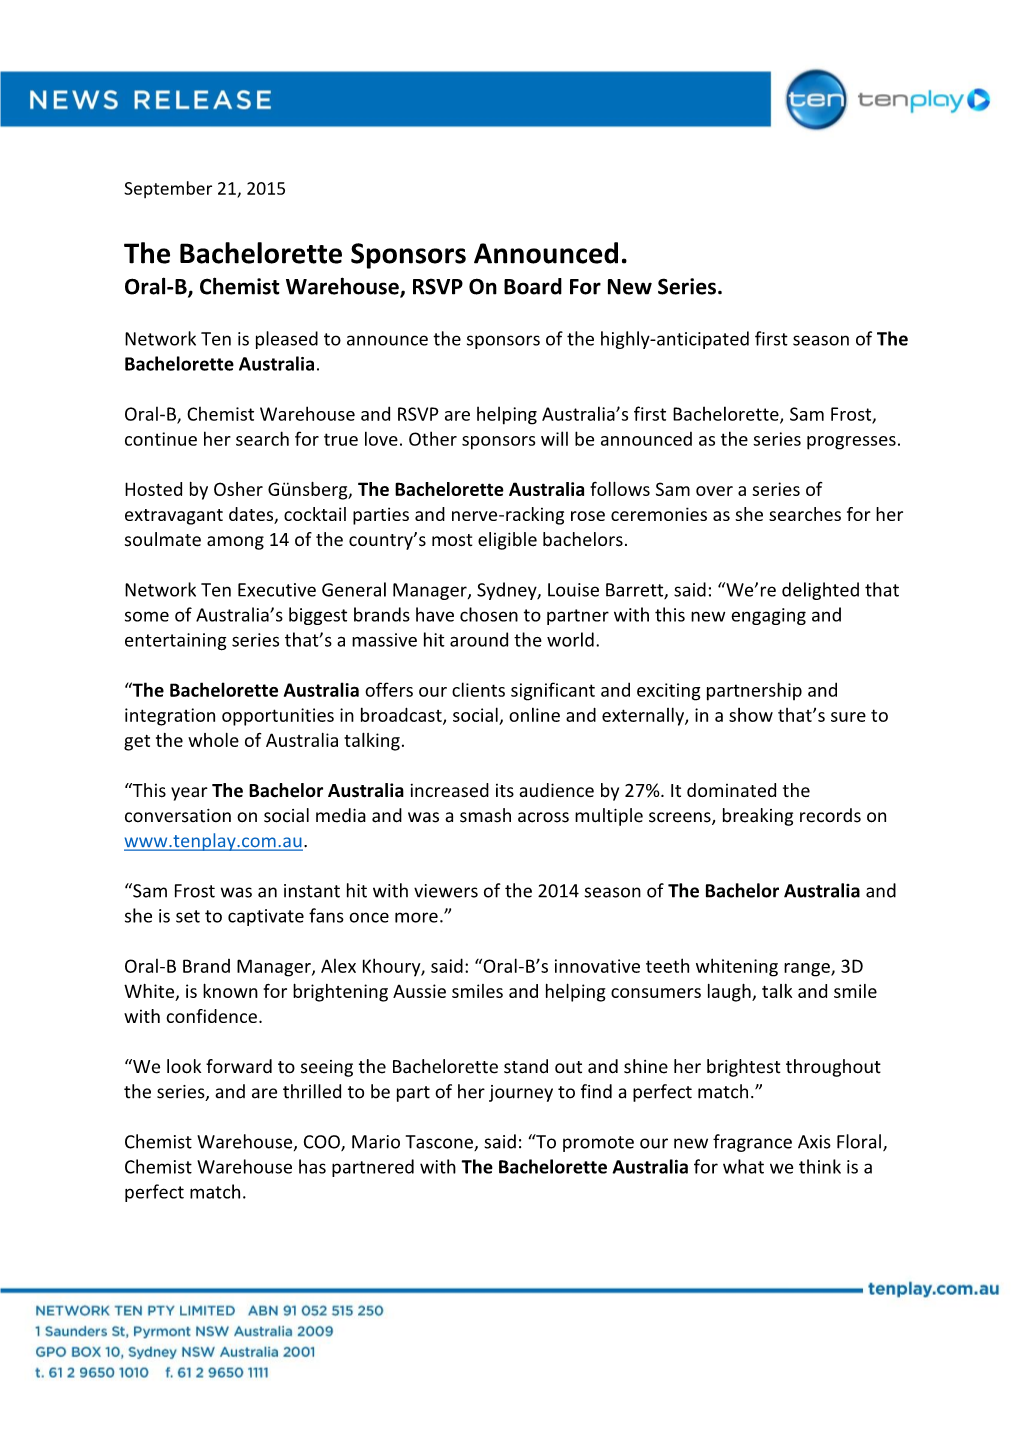 The Bachelorette Sponsors Announced. Oral-B, Chemist Warehouse, RSVP on Board for New Series